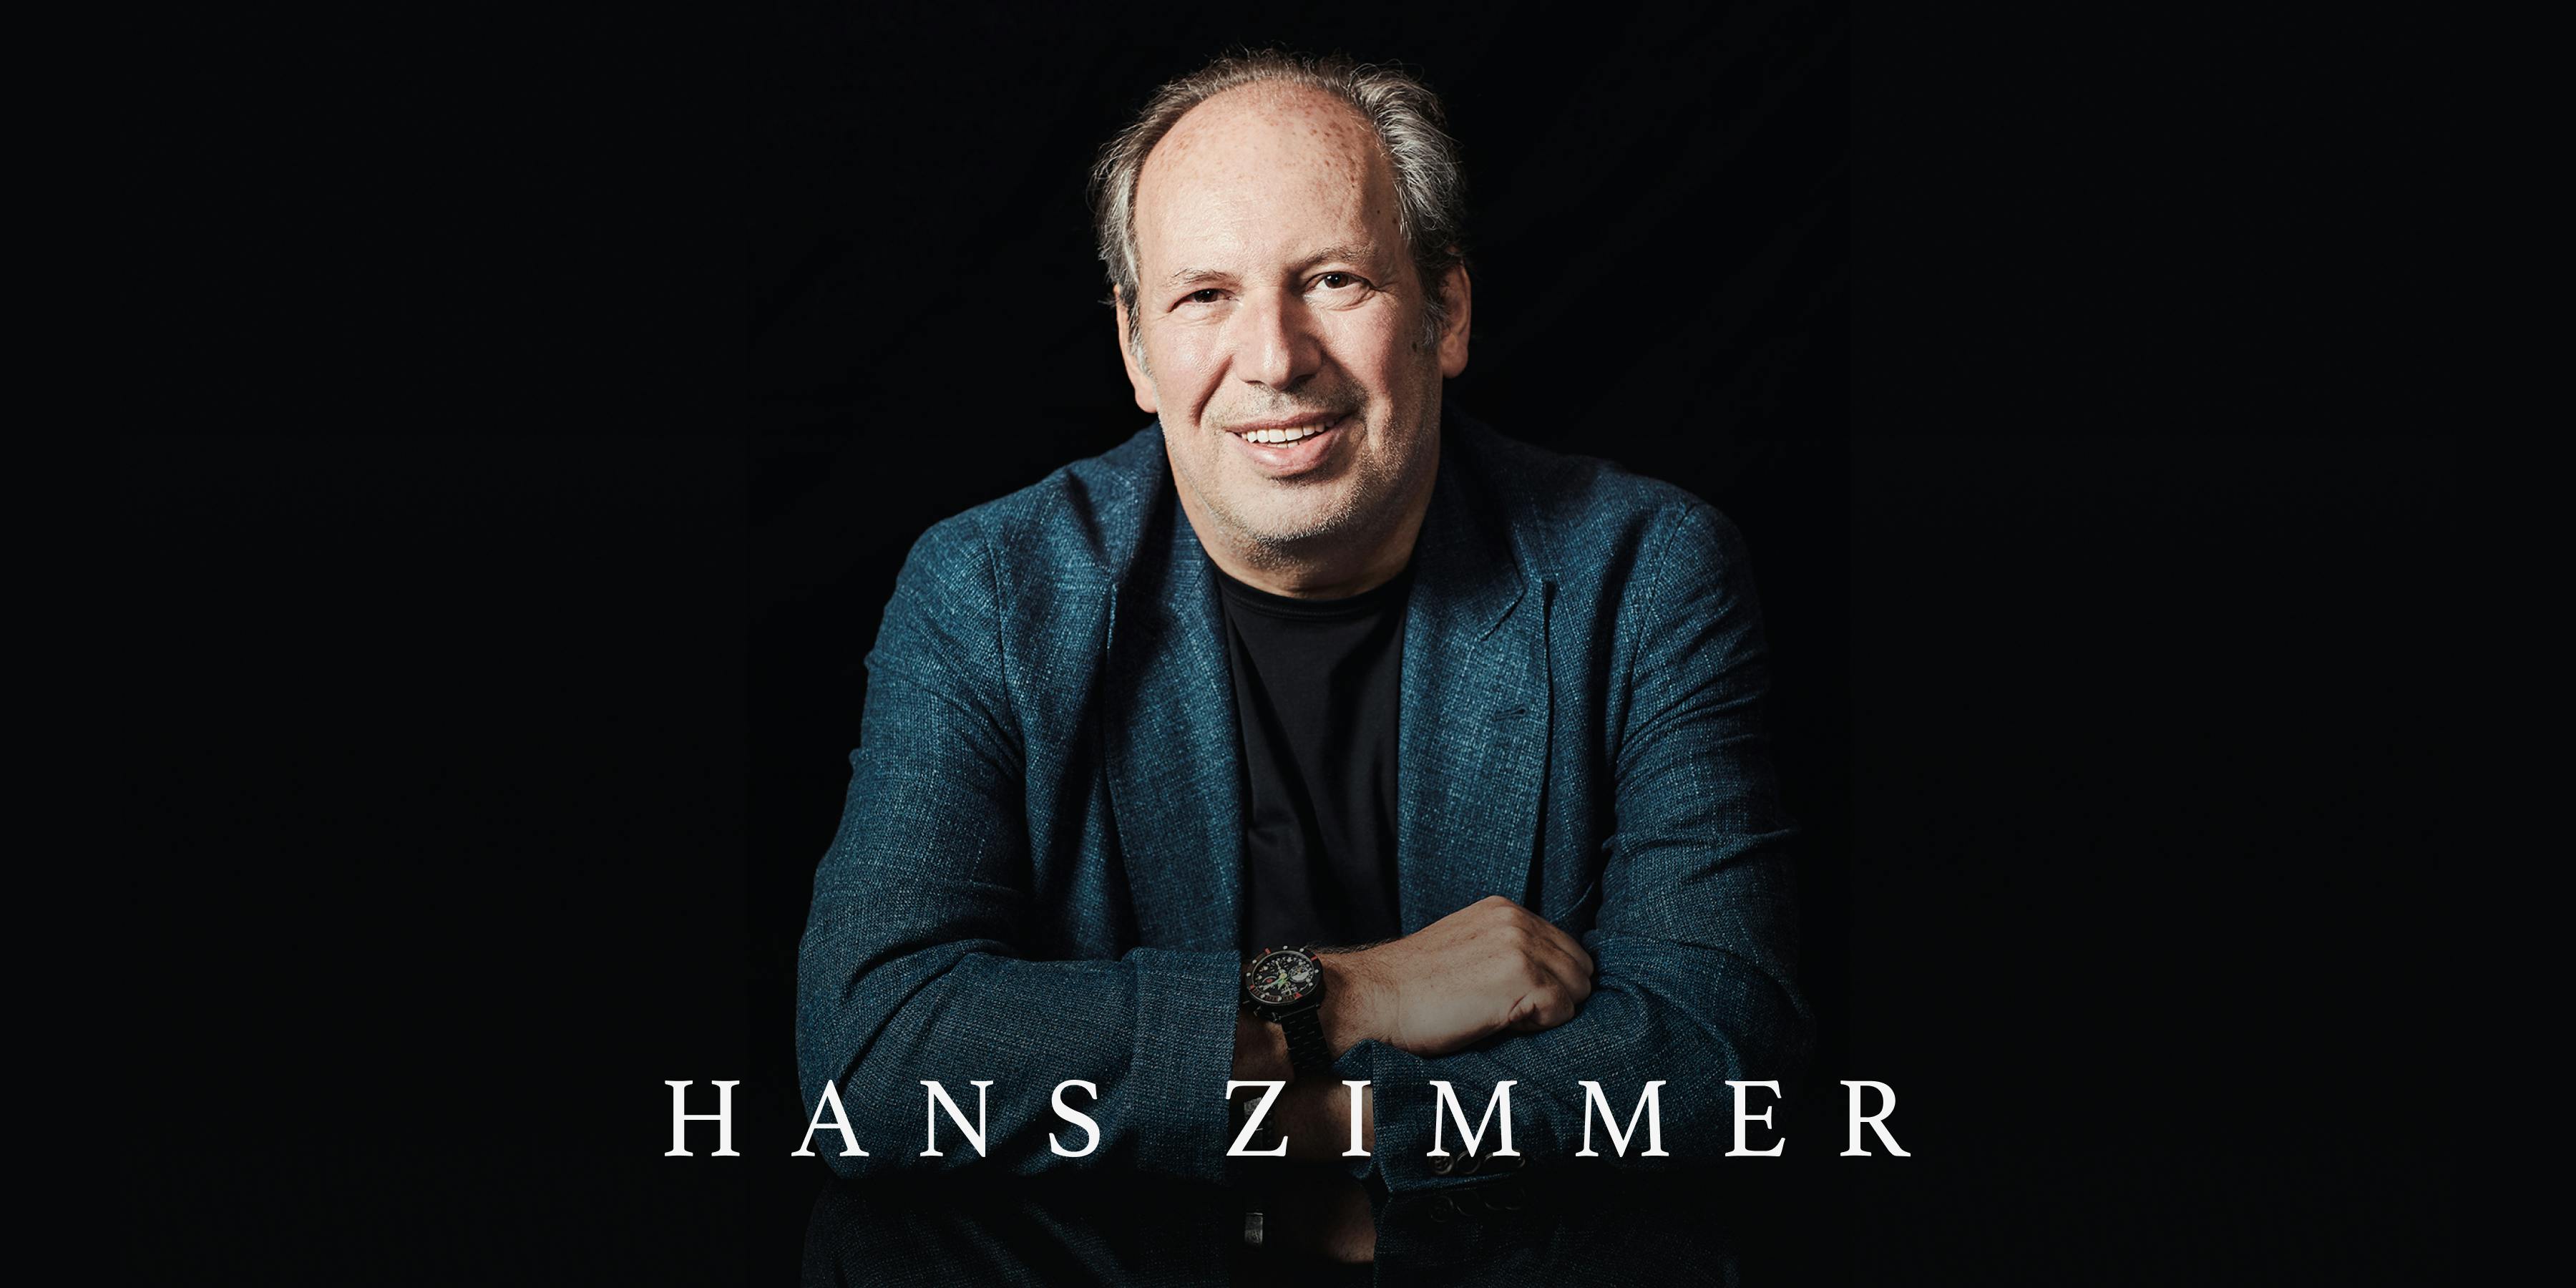 Hans Zimmer Interview - The Art of Film Scoring